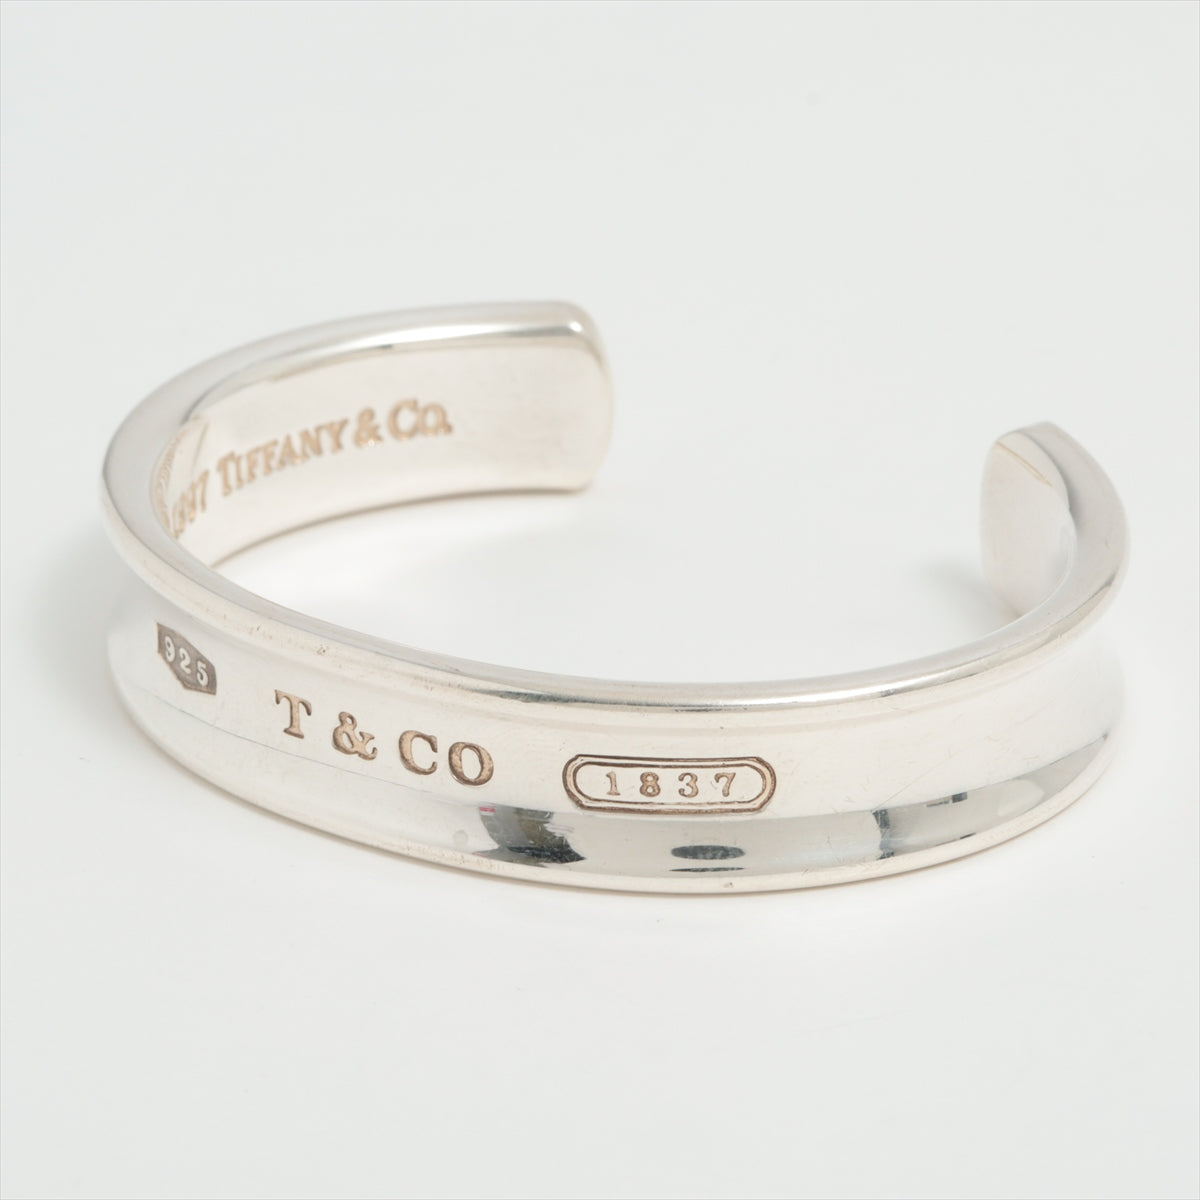 Tiffany 1837 Narrow Bangle 925 42.3g Silver